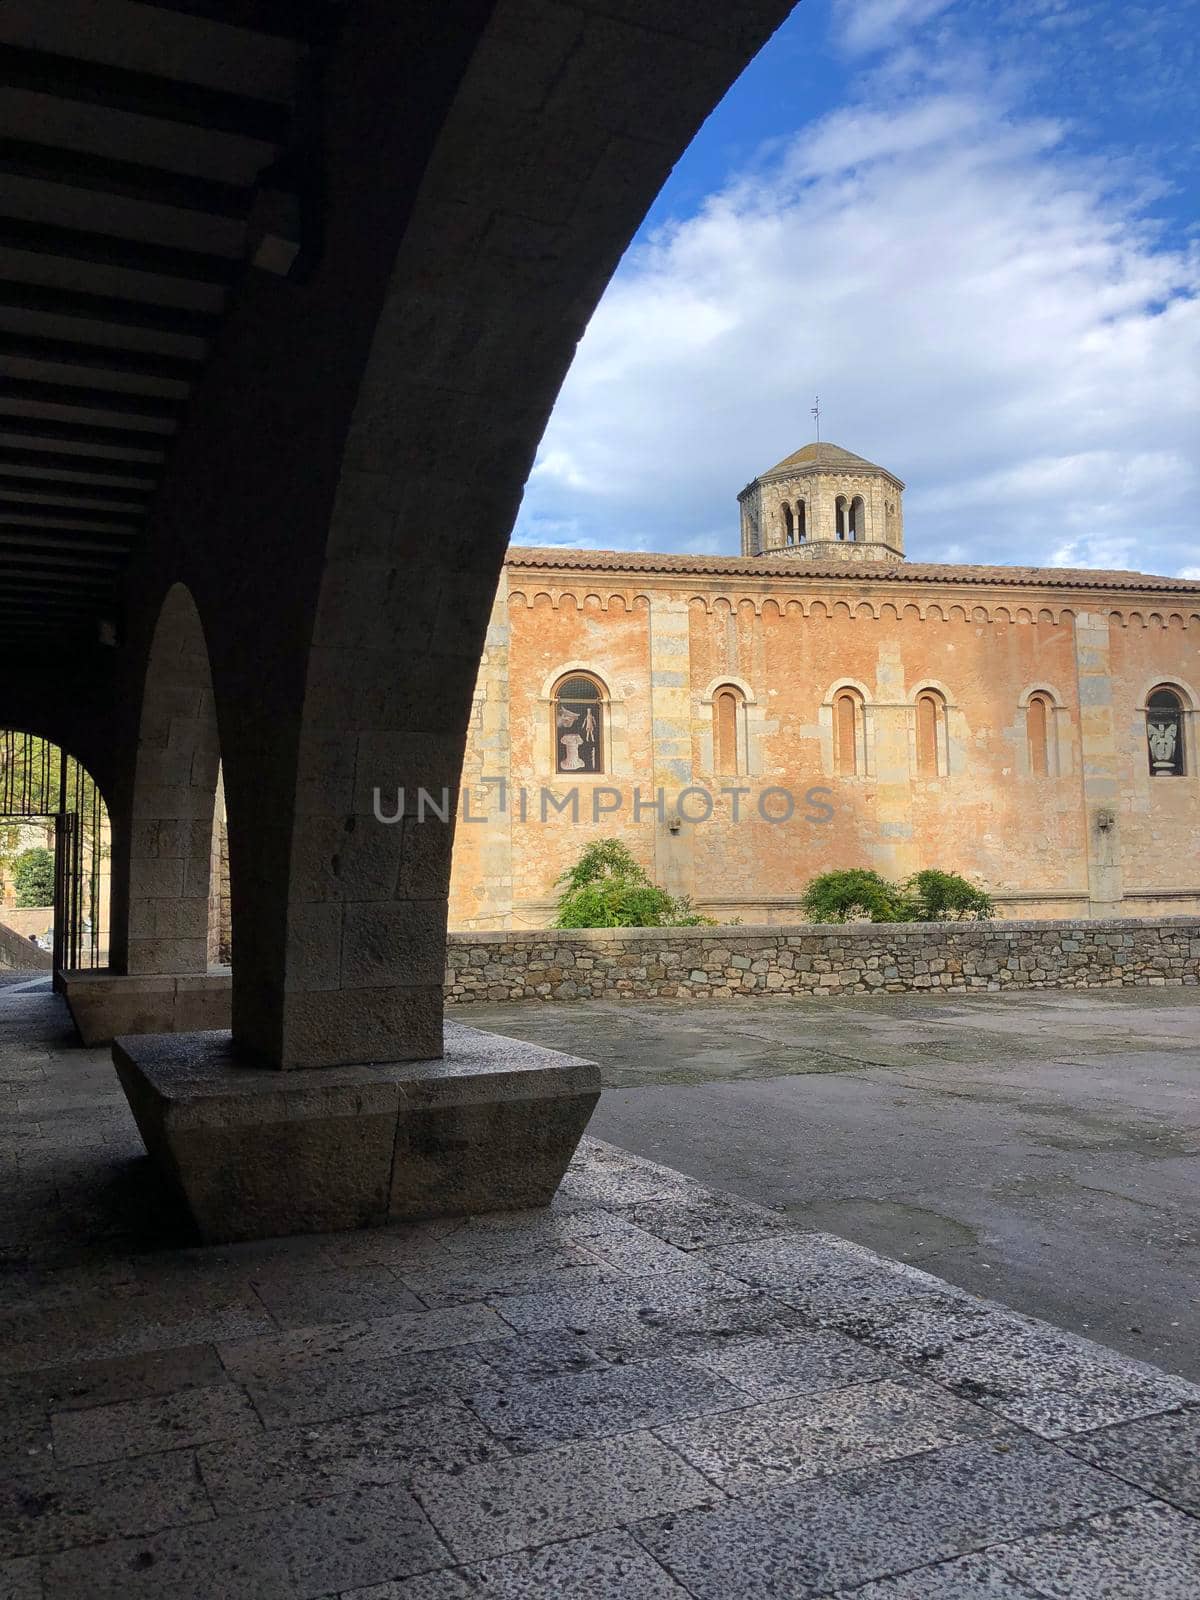 Sant Pere de Galligants Monastery in Girona, Spain